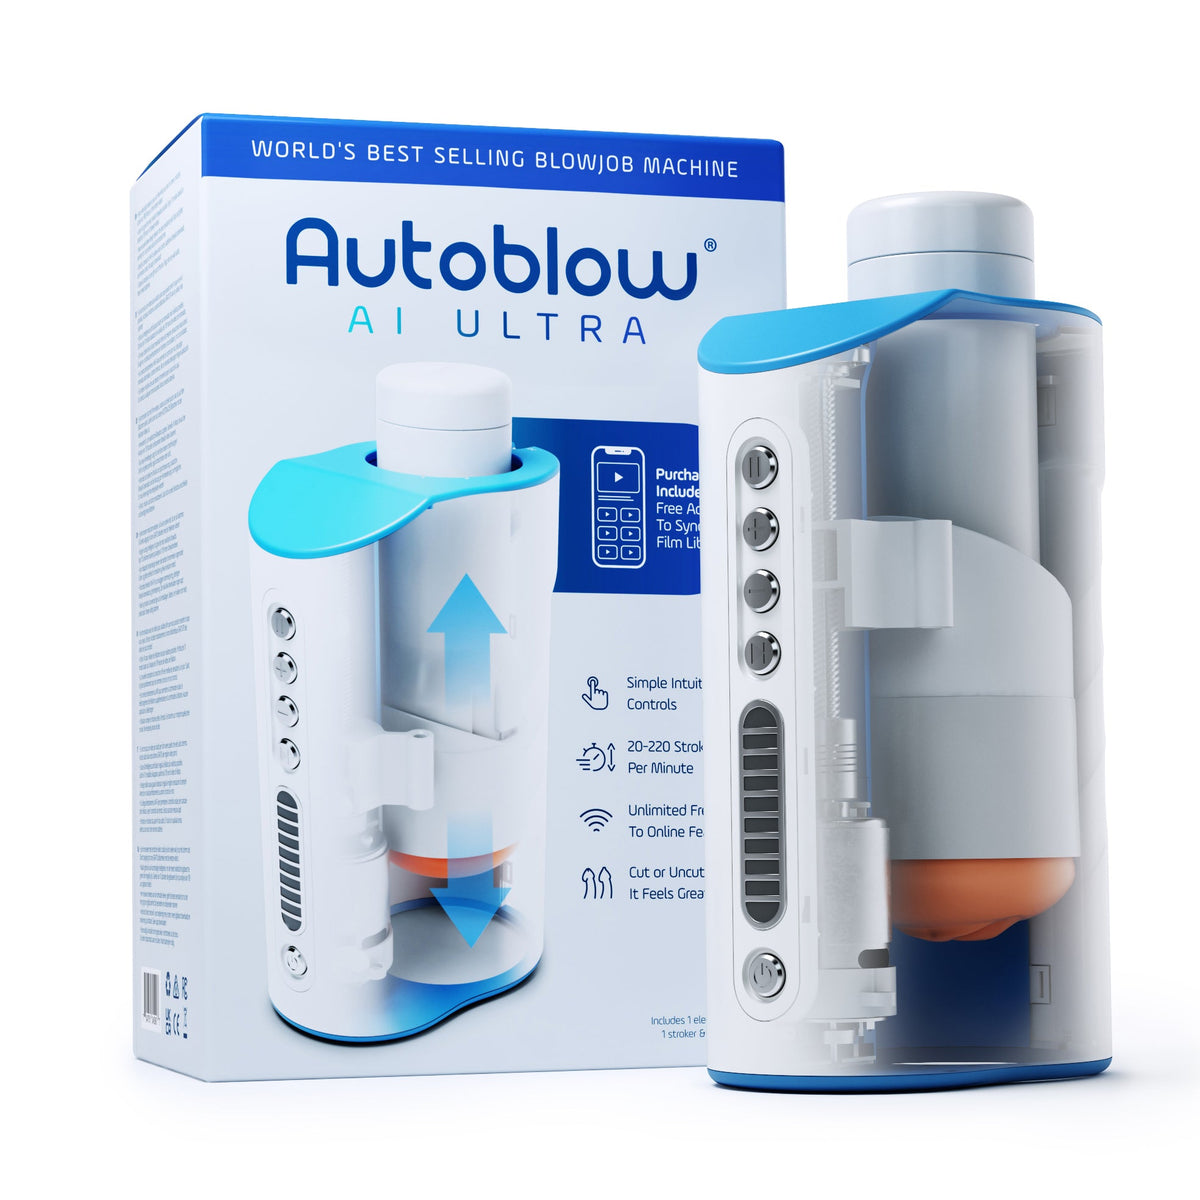 Autoblow - เครื่องช่วยตัวเองแบบแฮนด์ฟรี AI Ultra Machine (สีขาว)